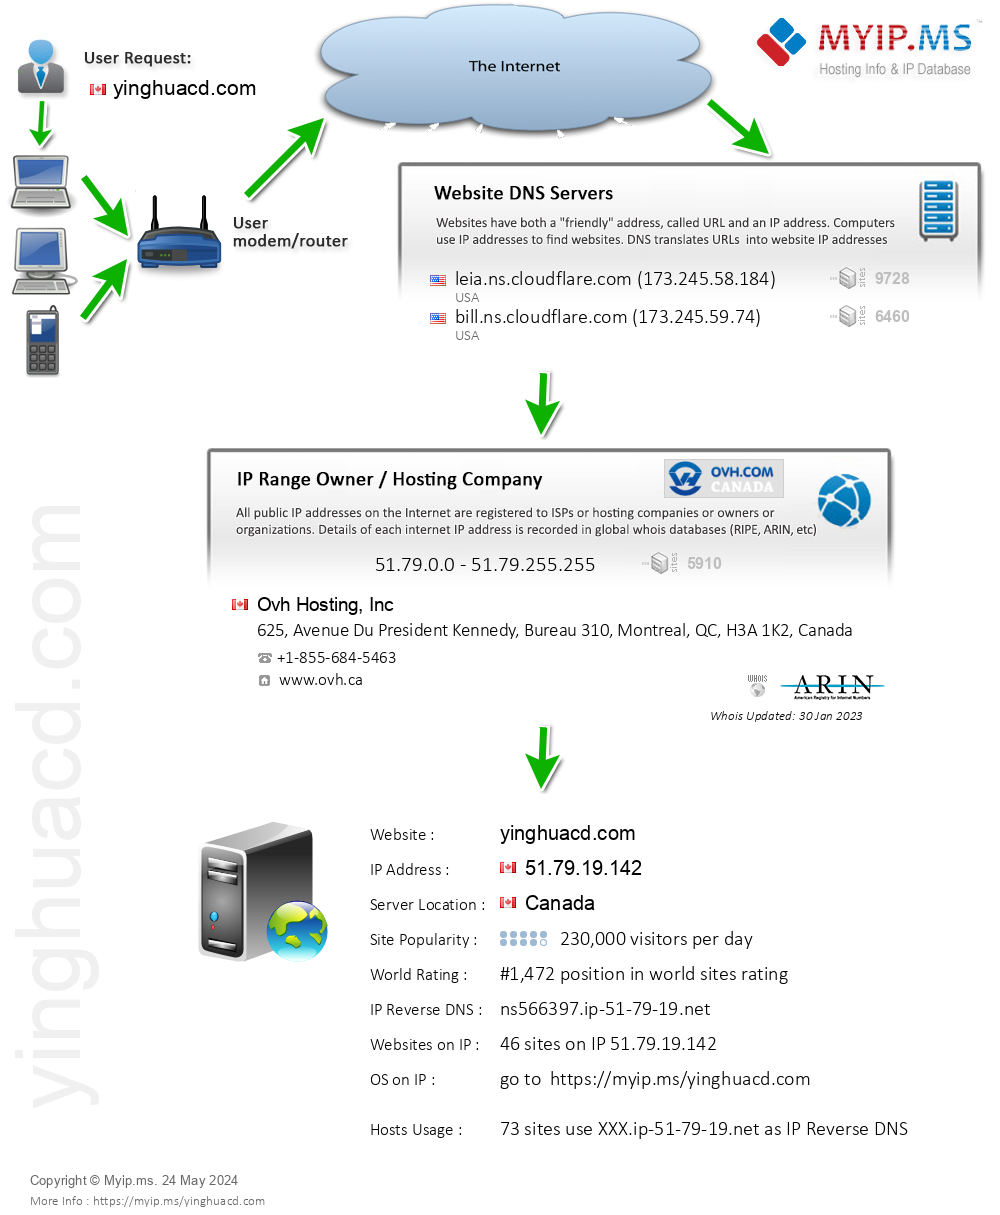 Yinghuacd.com - Website Hosting Visual IP Diagram